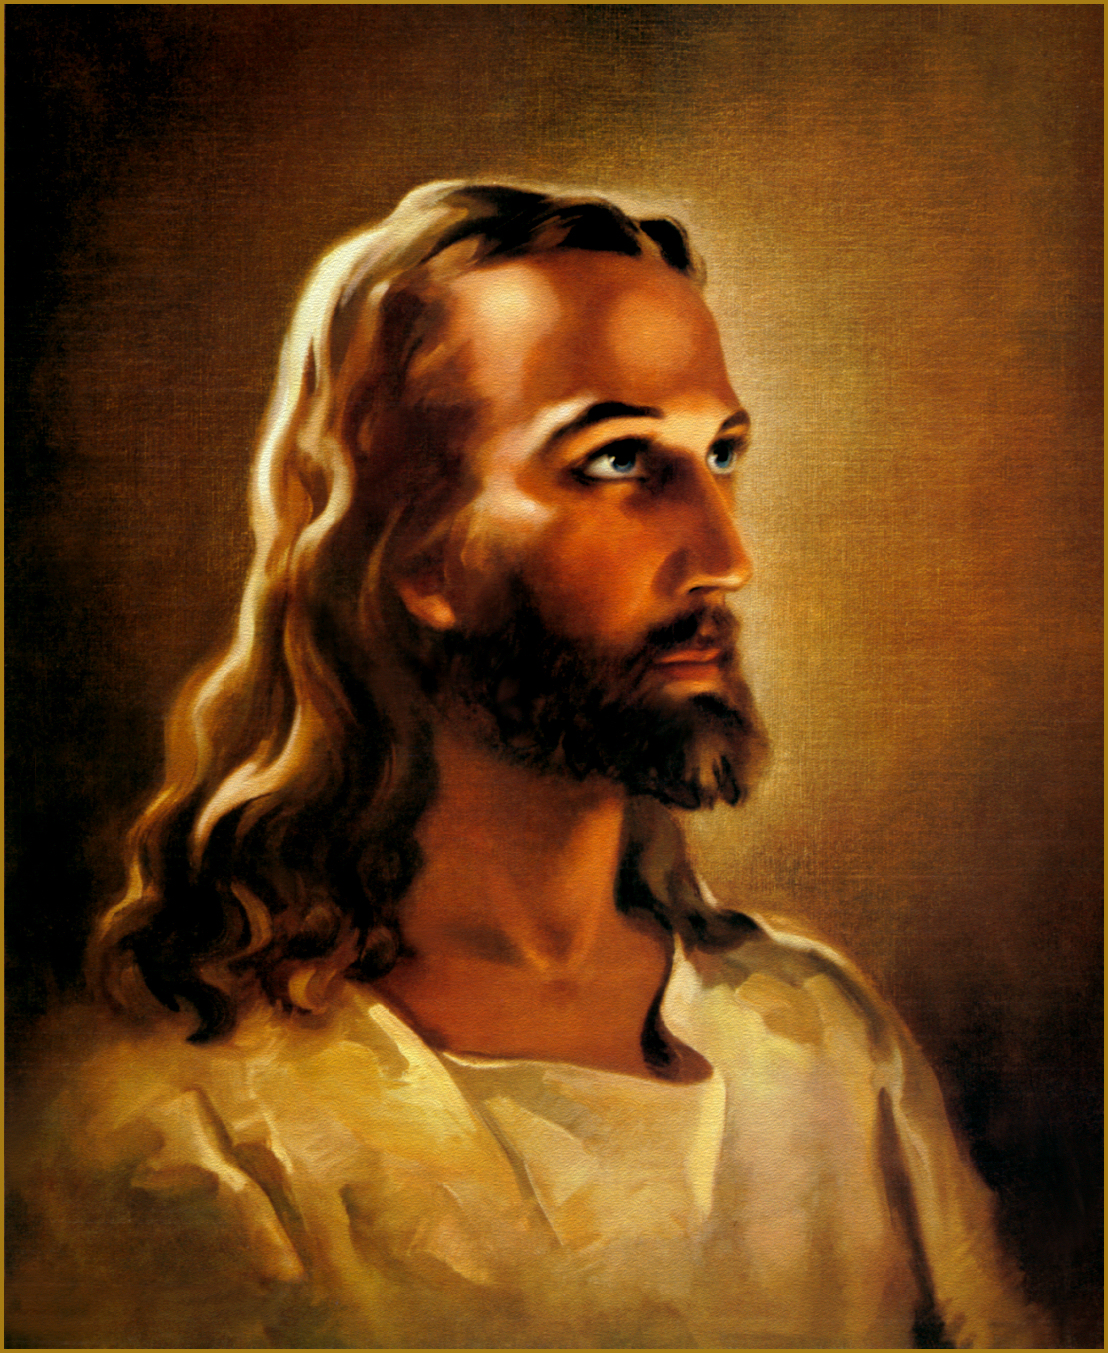 Christ Pics, Religious Collection